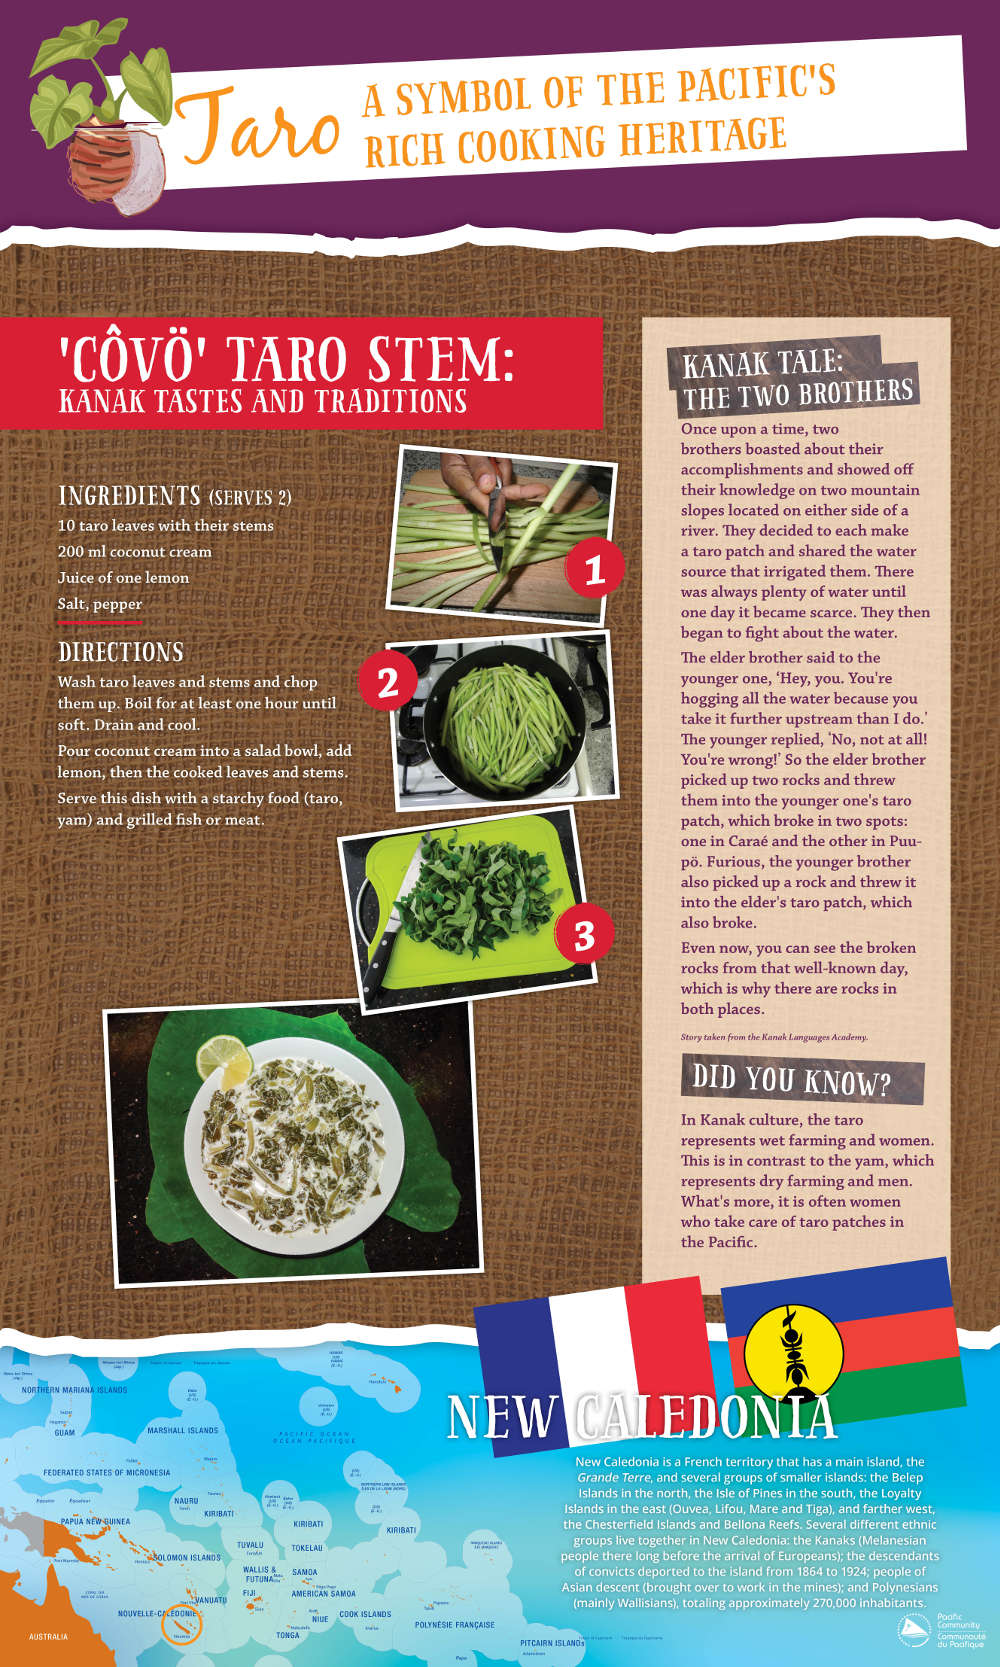 ‘Côvö’ taro stem: Kanak tastes and traditions from New Caledonia